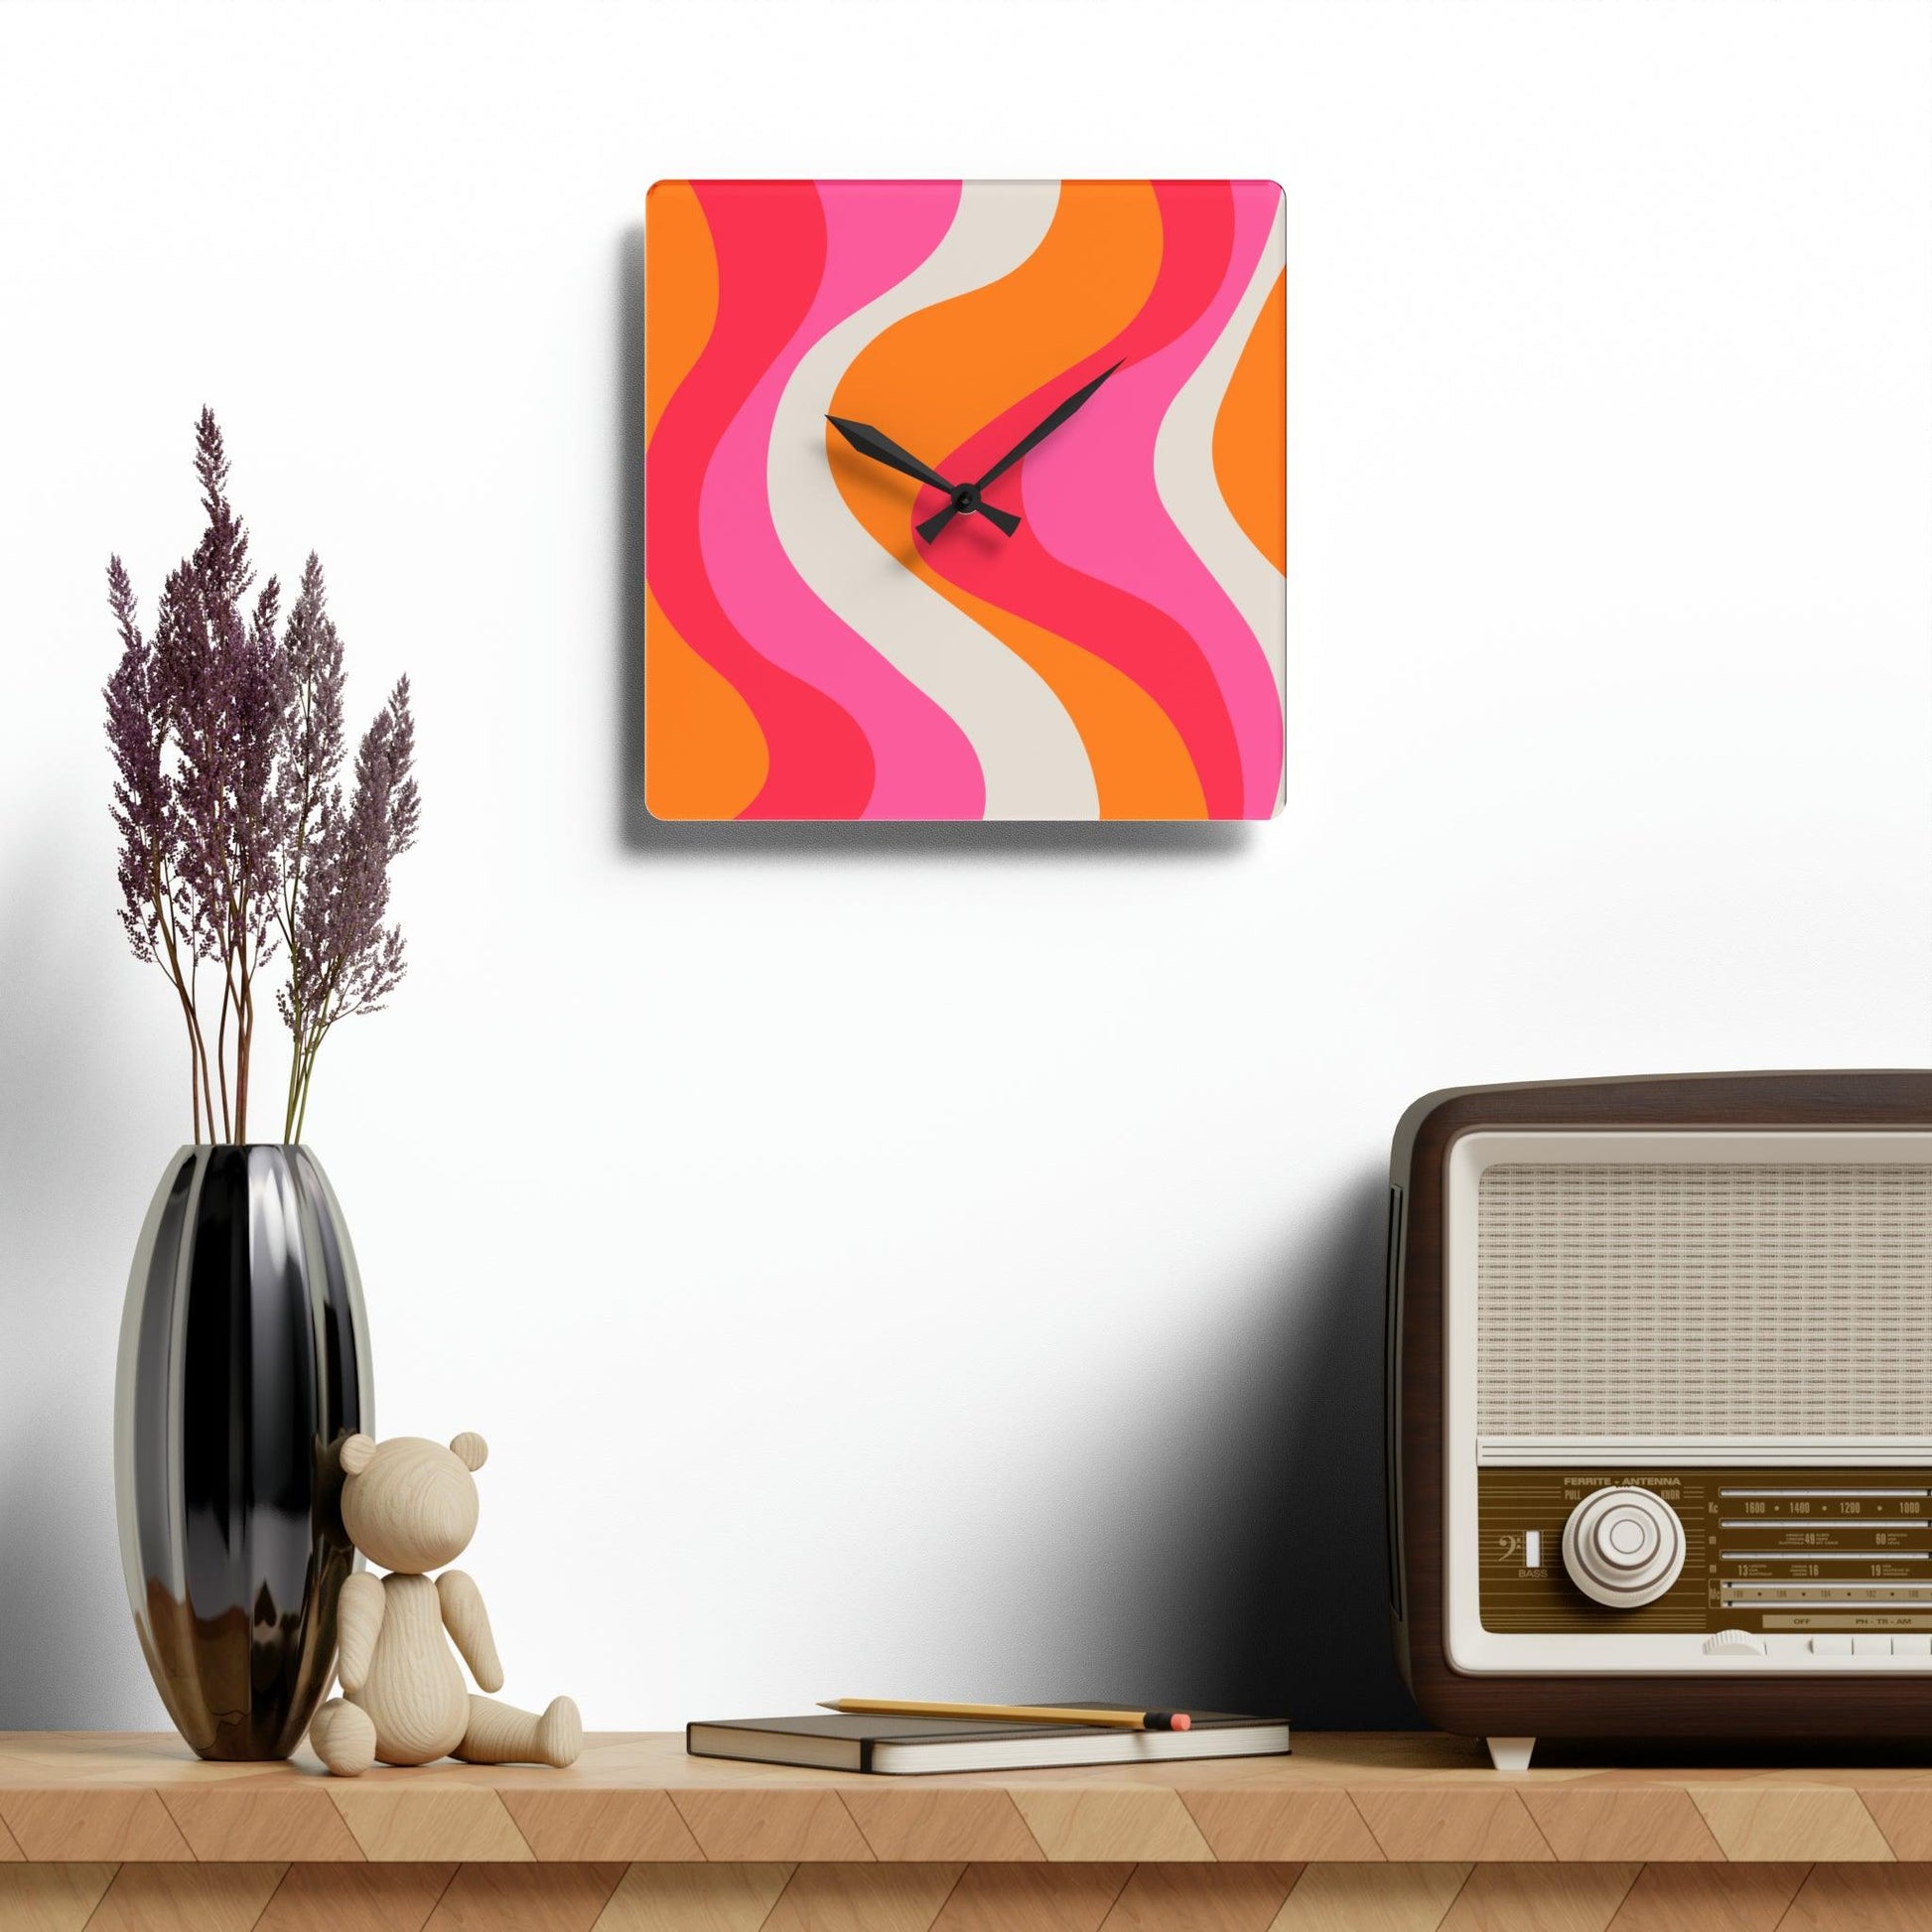 Groovy 60's Hippie Swirl Pink & Orange Mid Century Mod Acrylic Wall Clock | lovevisionkarma.com